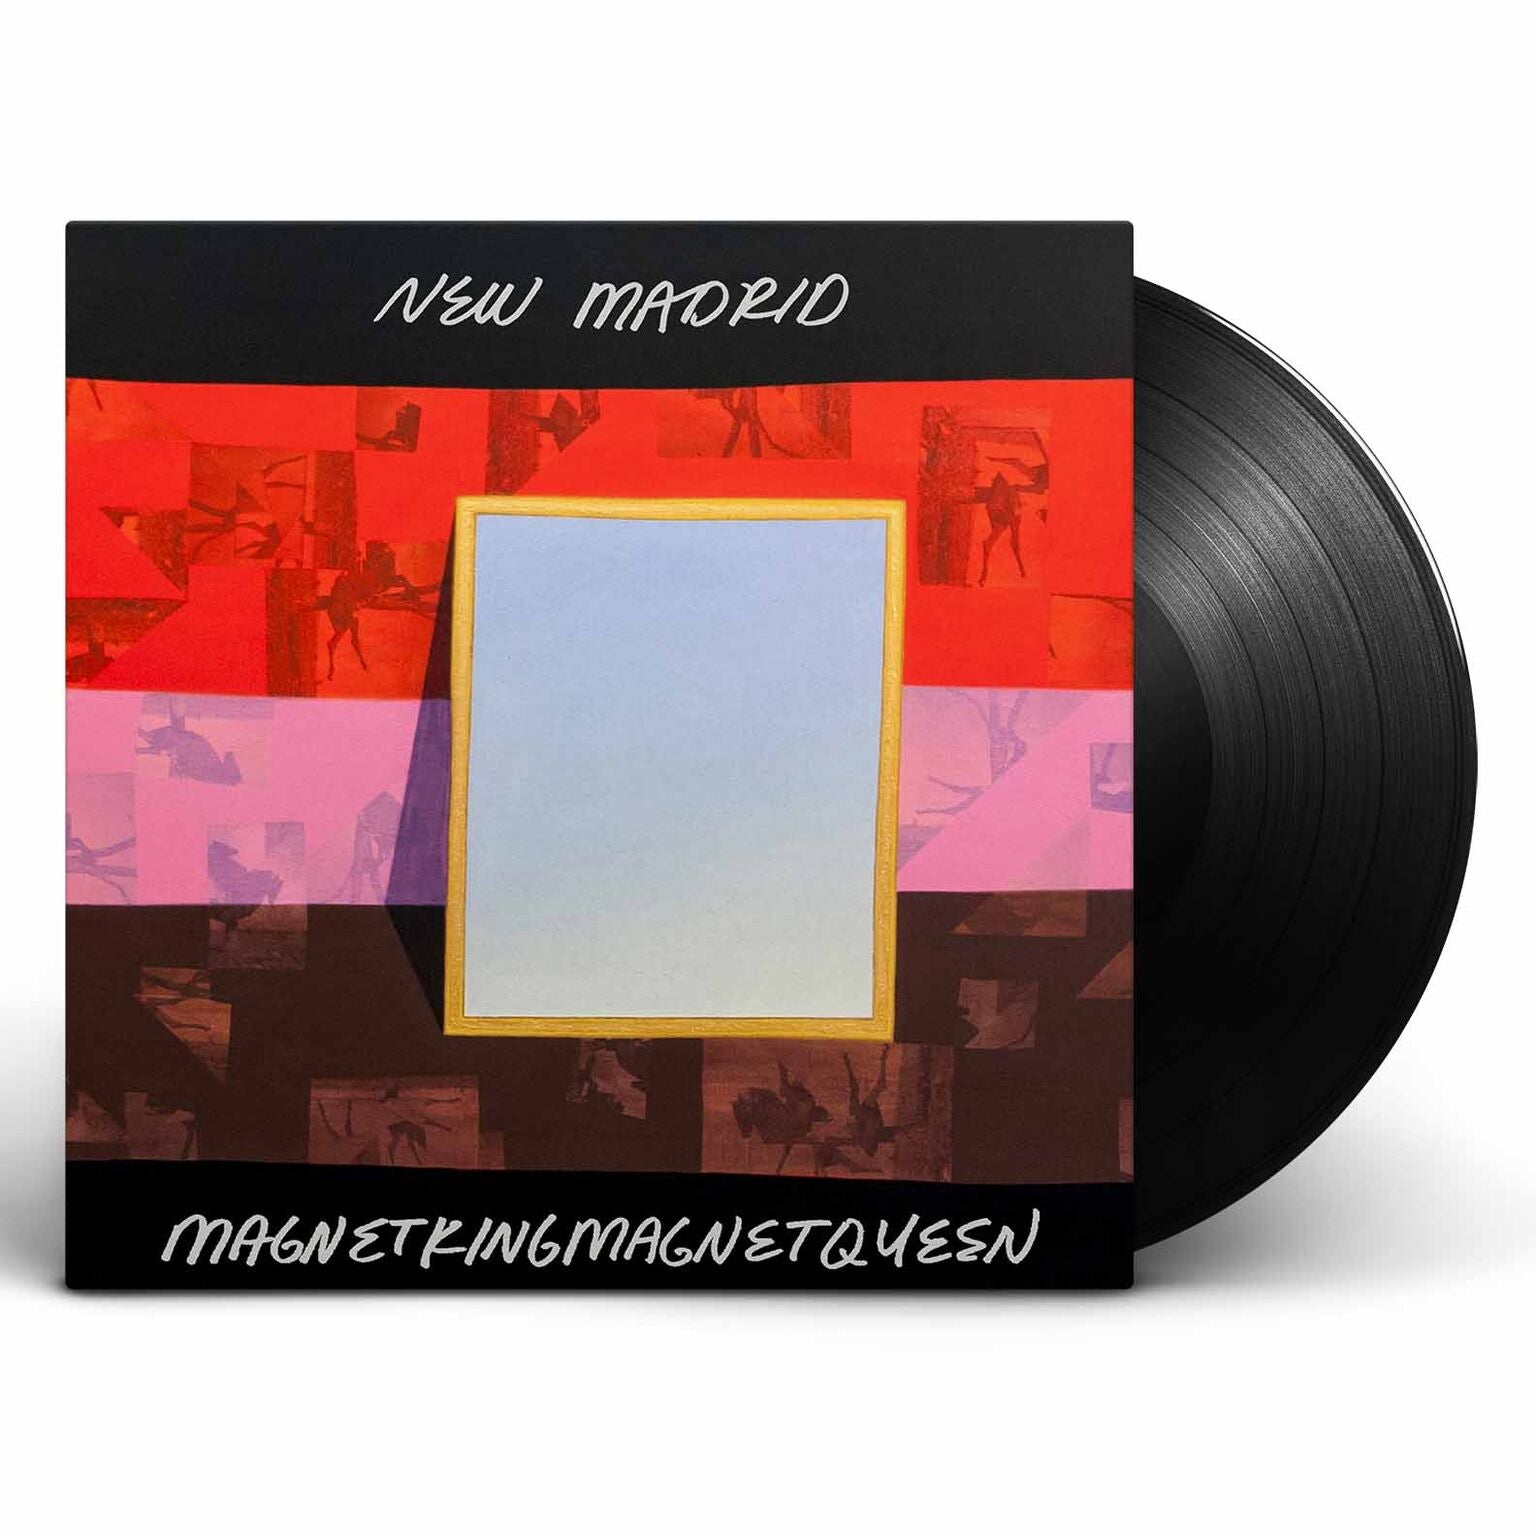 New Madrid - magnetkingmagnetqueen [Vinyl]